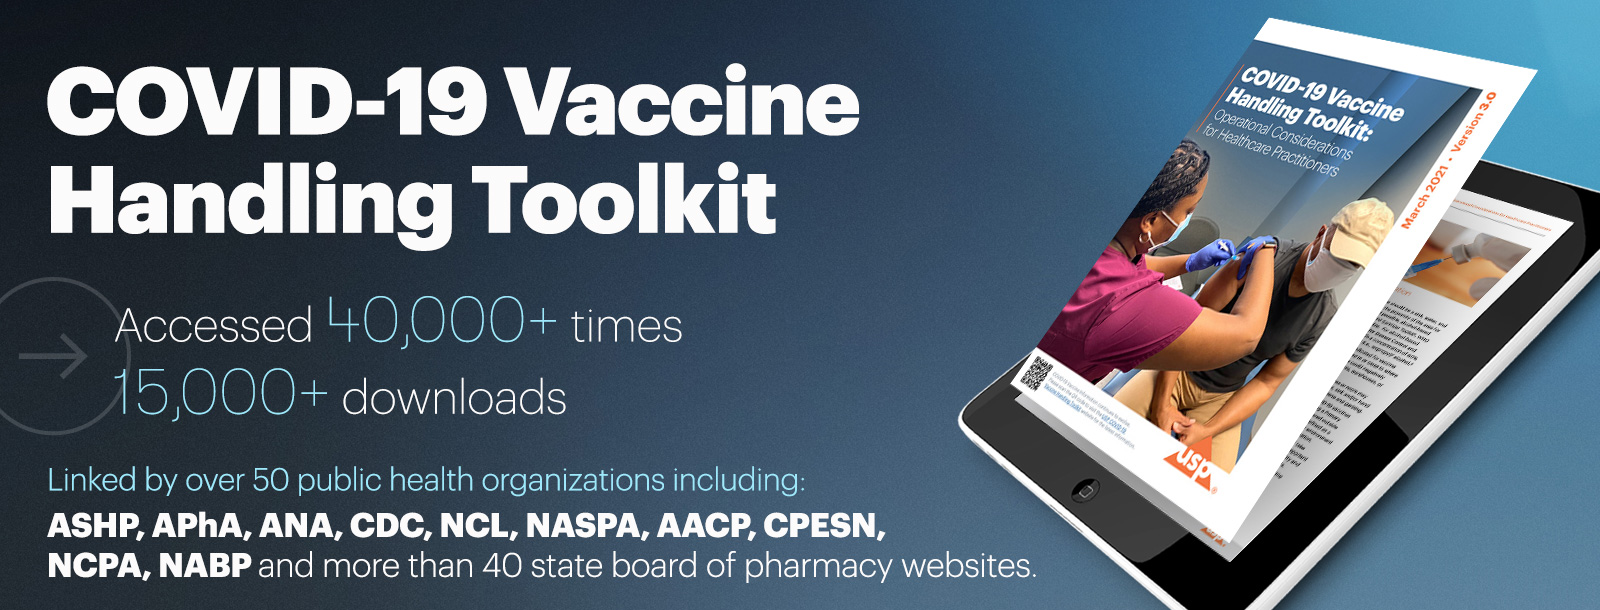 vaccine handling toolkit metrics